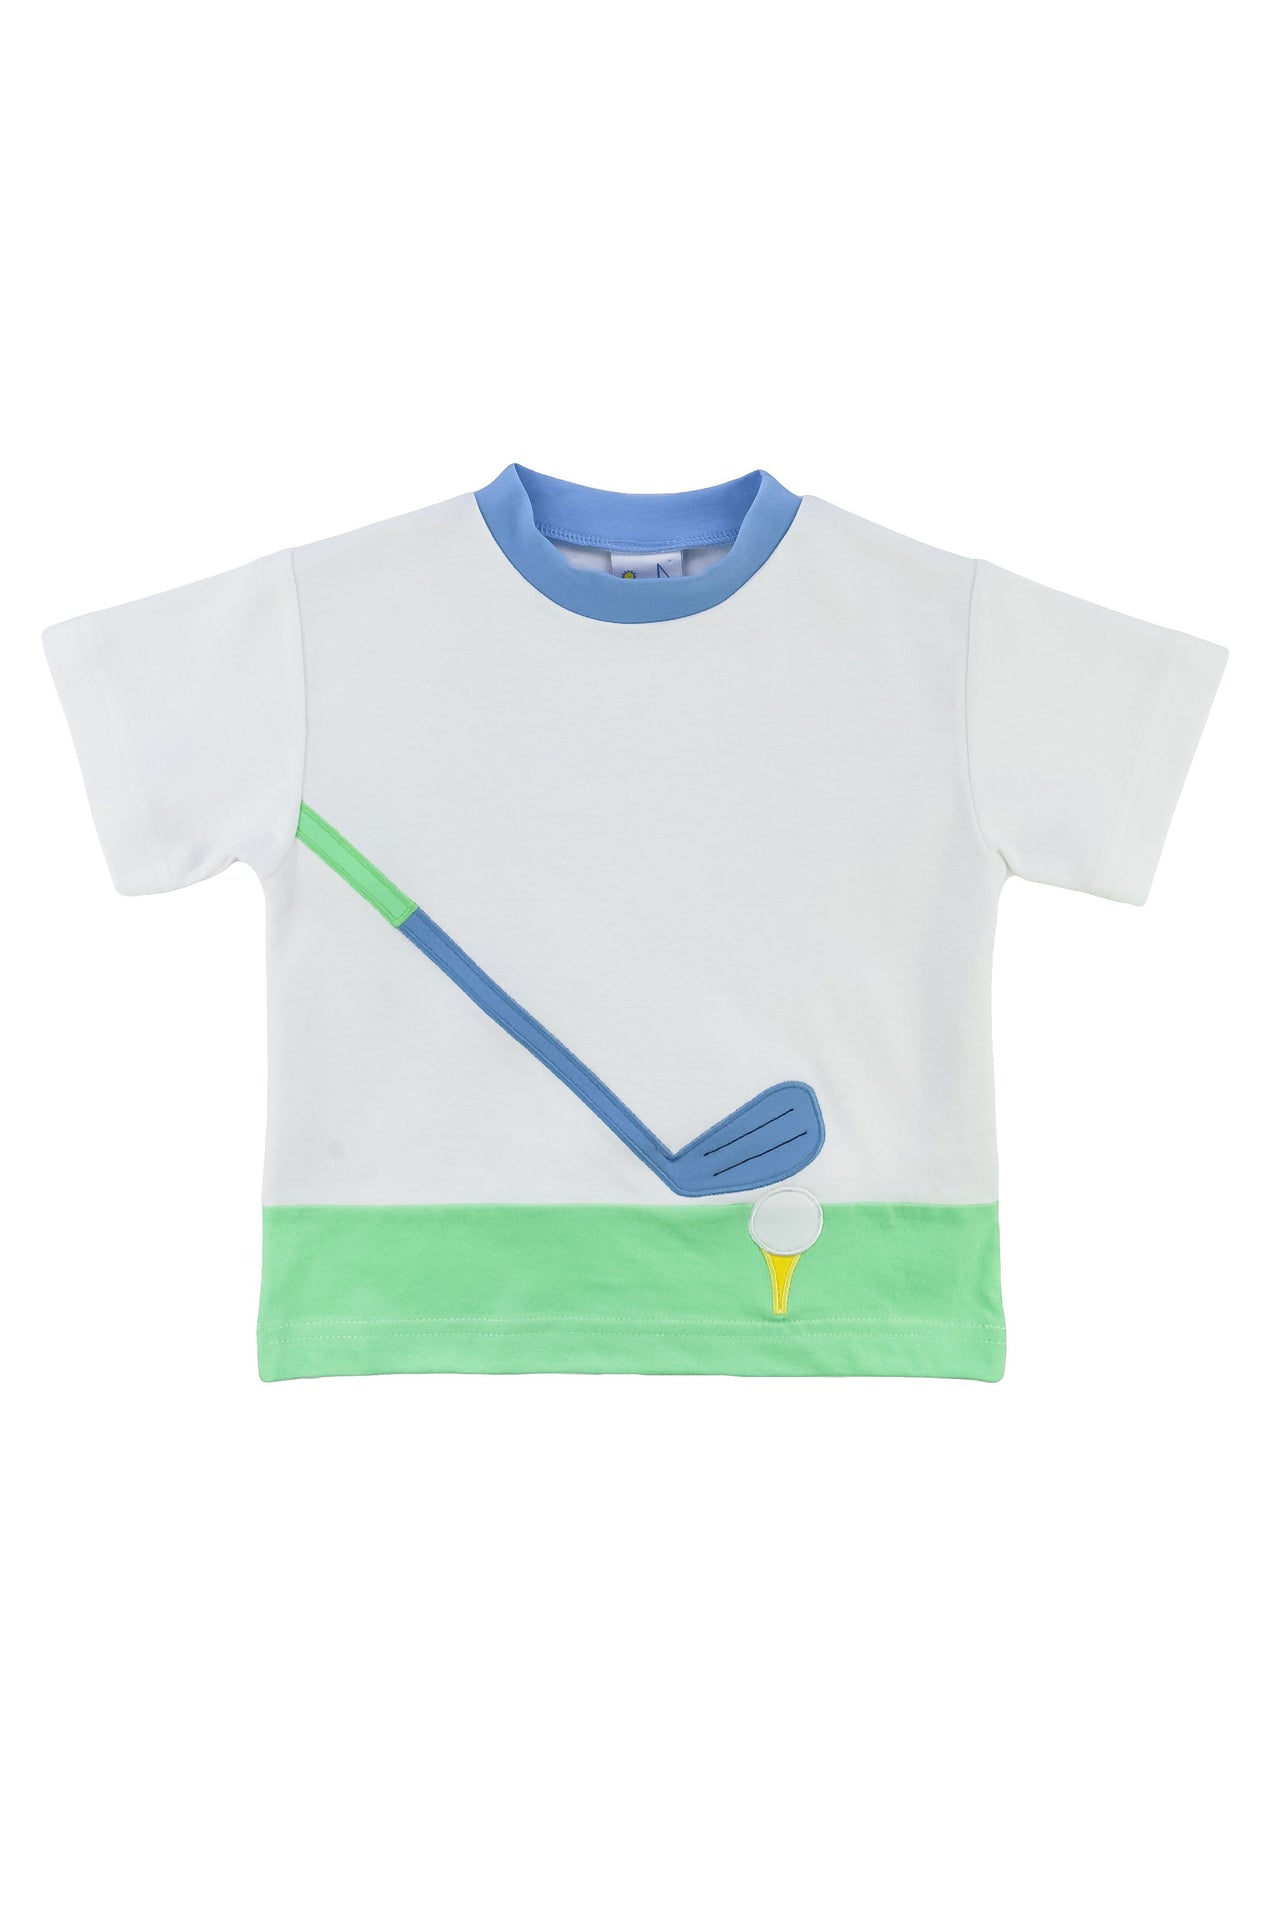 Florence Eiseman Knit Shirt W/Golf Club Applique C5169 5011